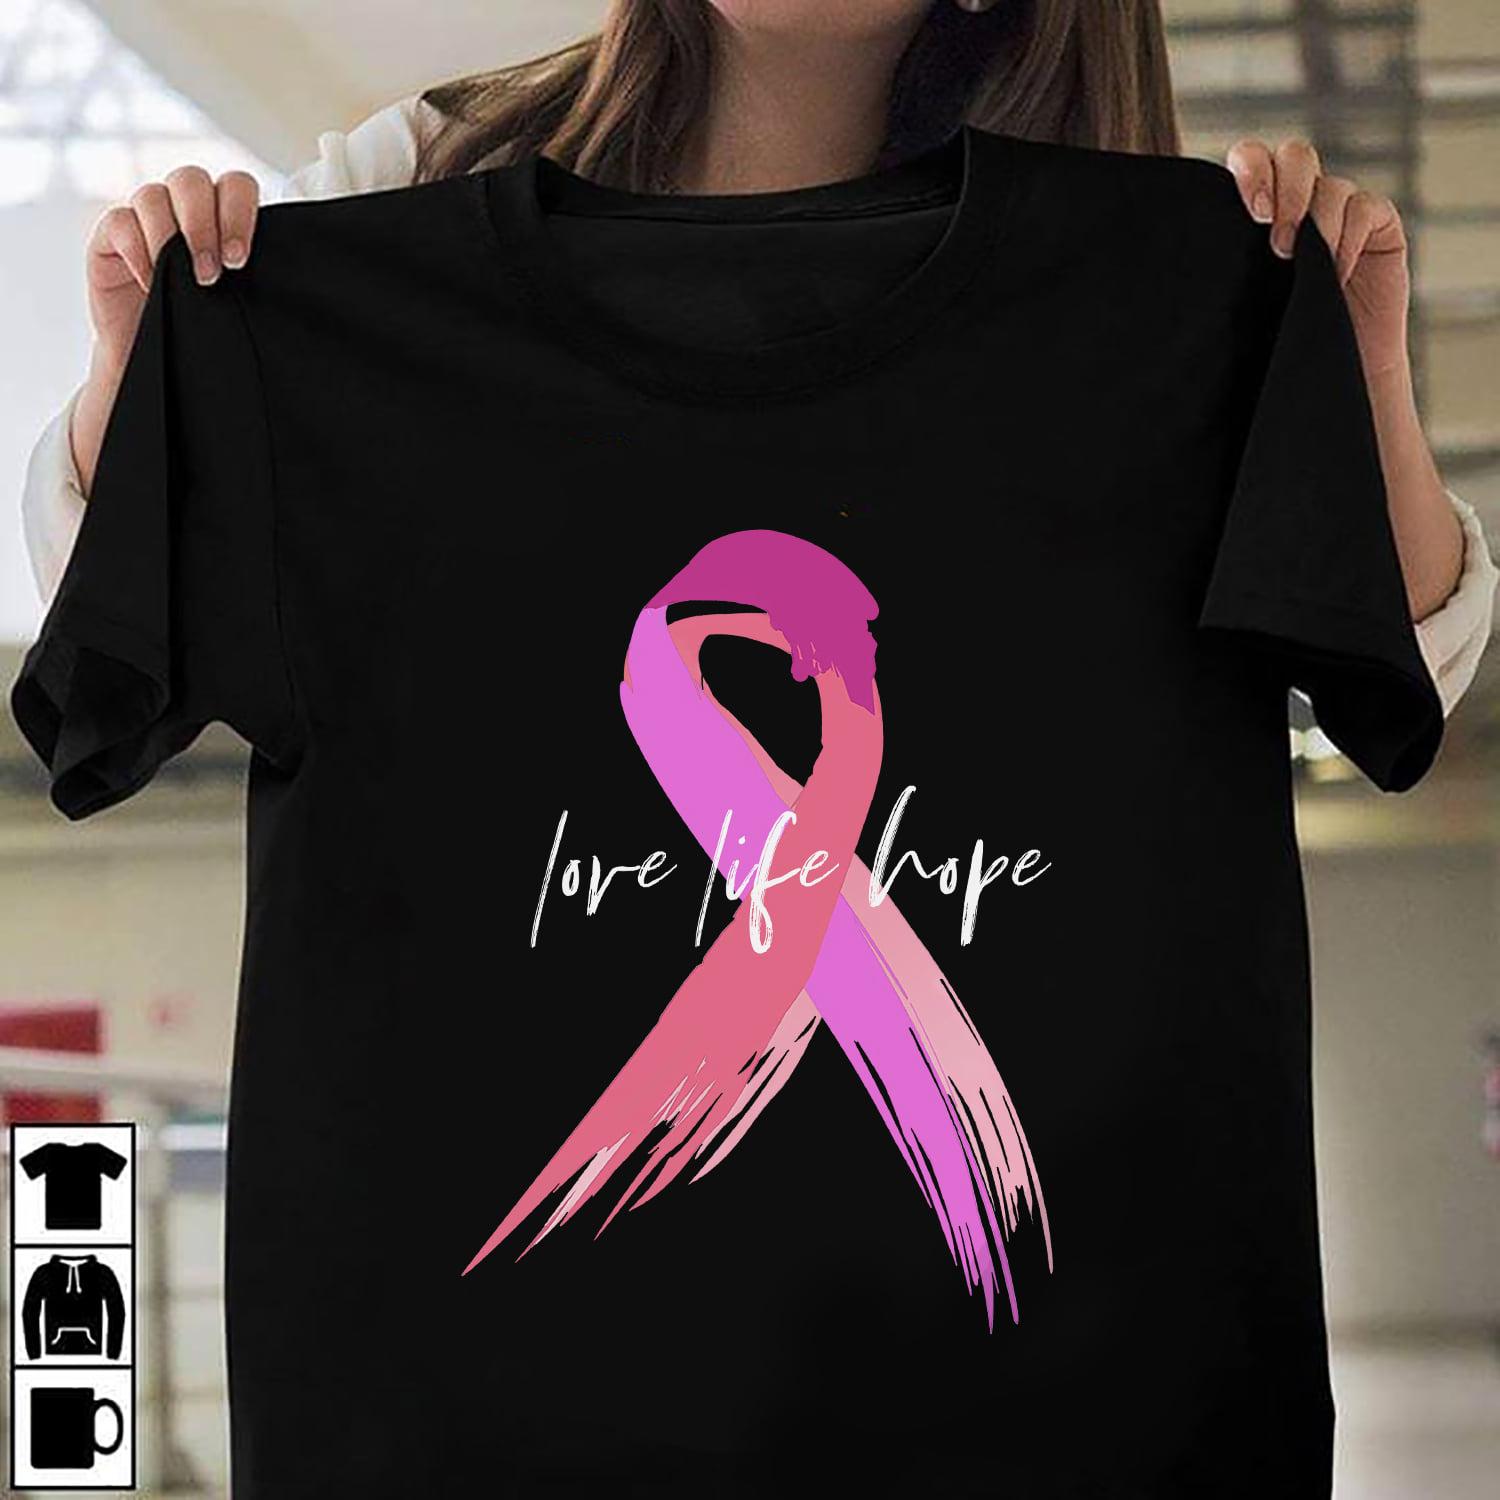 Never Lose Hope - Breast Cancer Awareness